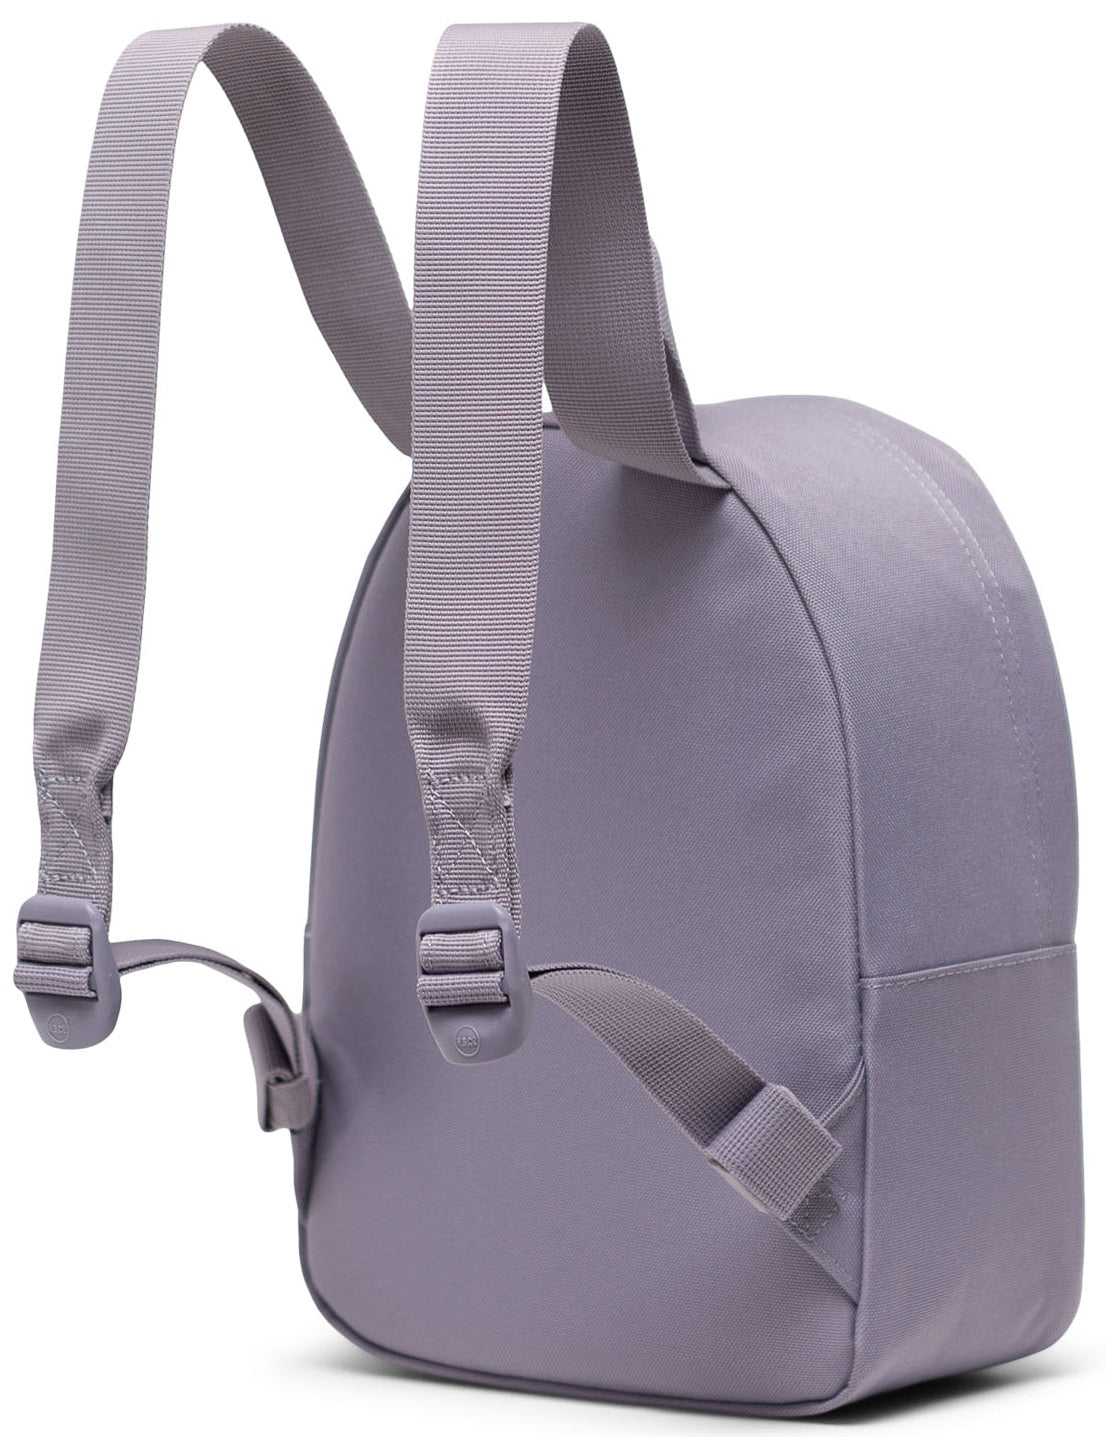 Herschel Classic Mini Backpack - Lavender Gray